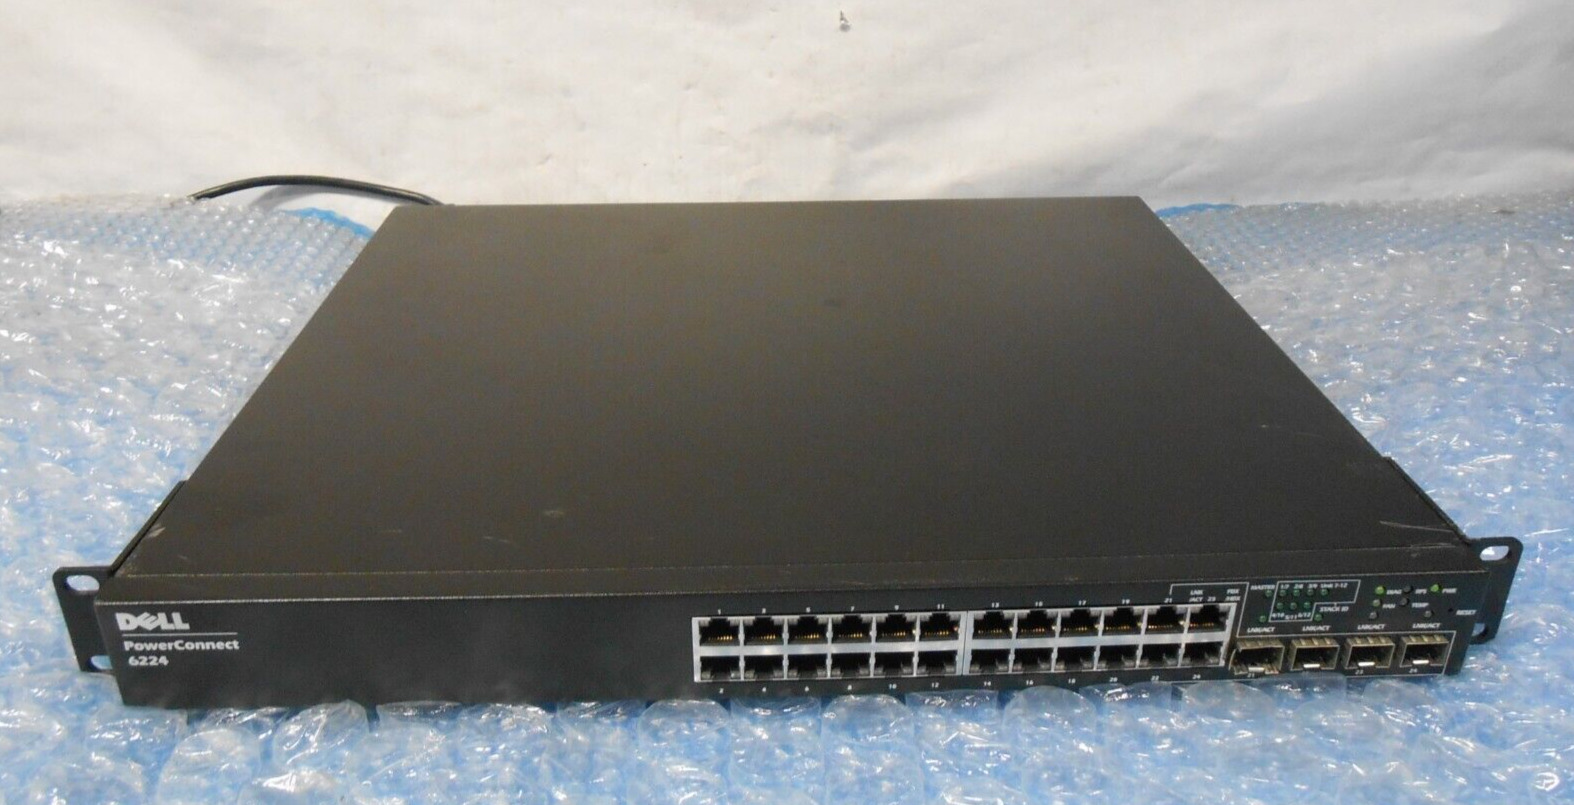 Dell PowerConnect 6224 Rackmount 24-Port Gigabit Managed Ethernet Network Switch